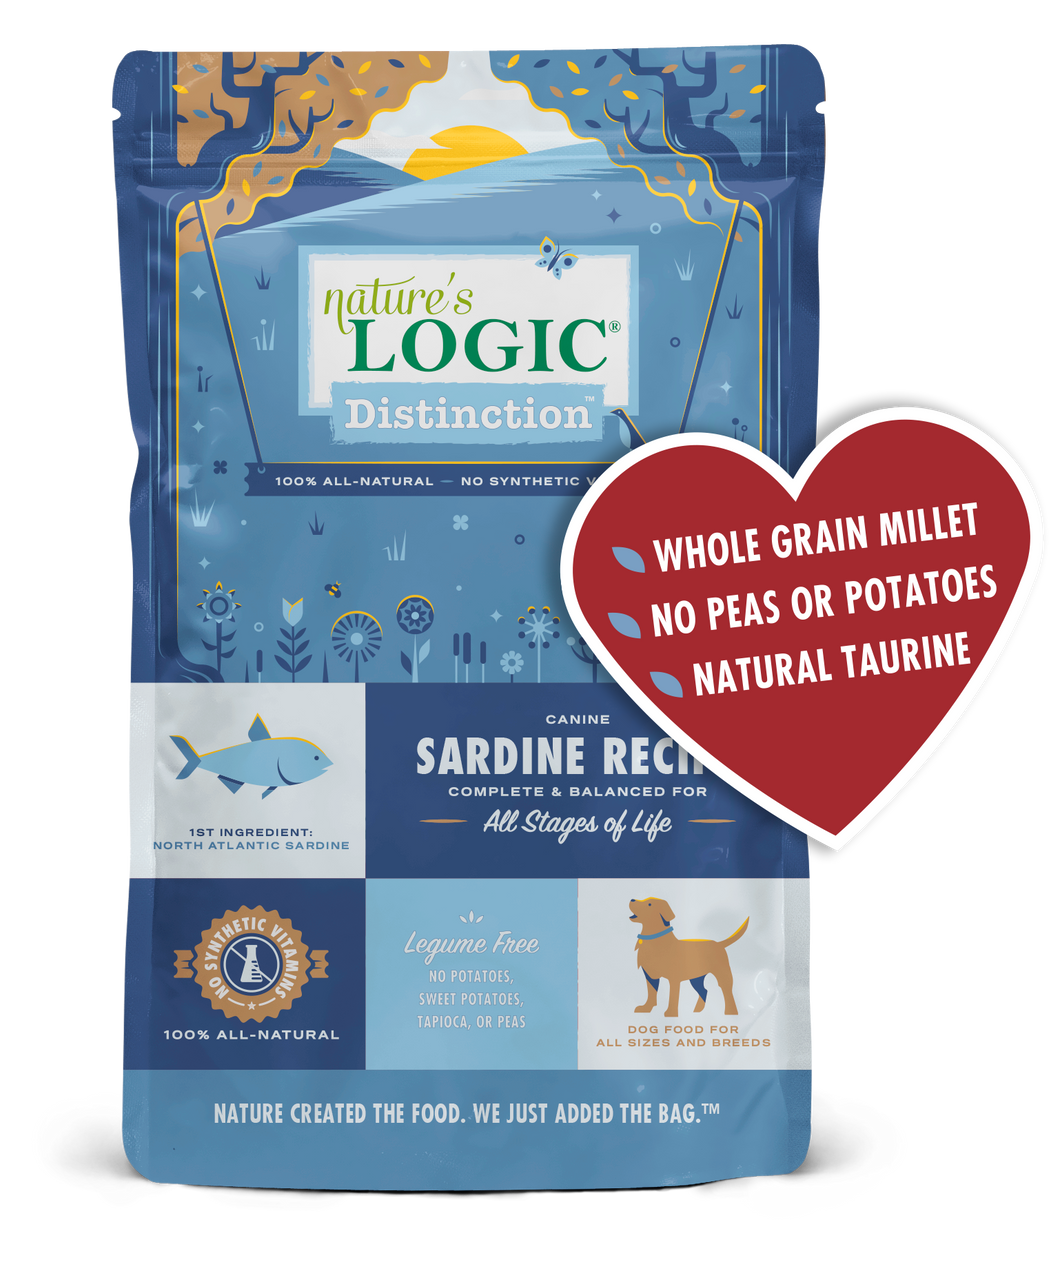 Nature's Logic Distinction - Sardine